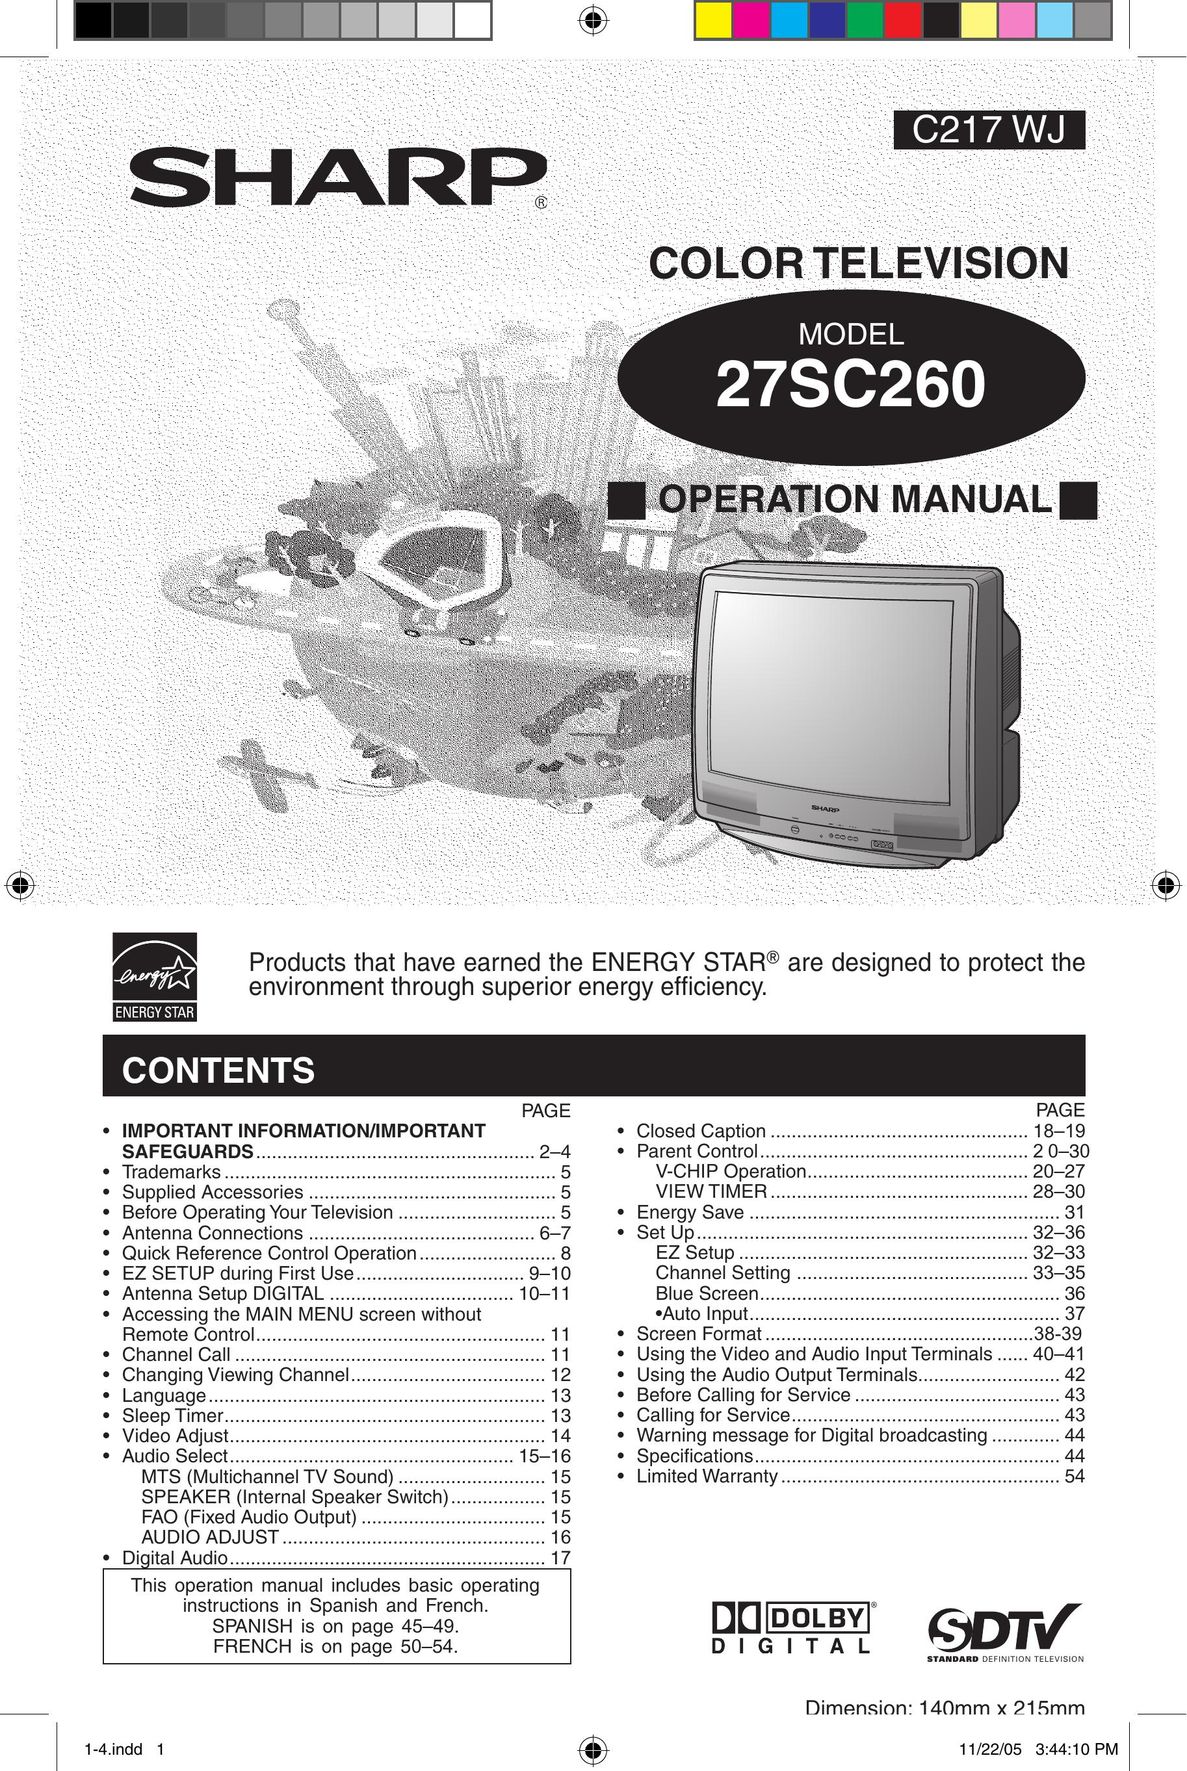 Sharp 27SC260 CRT Television User Manual